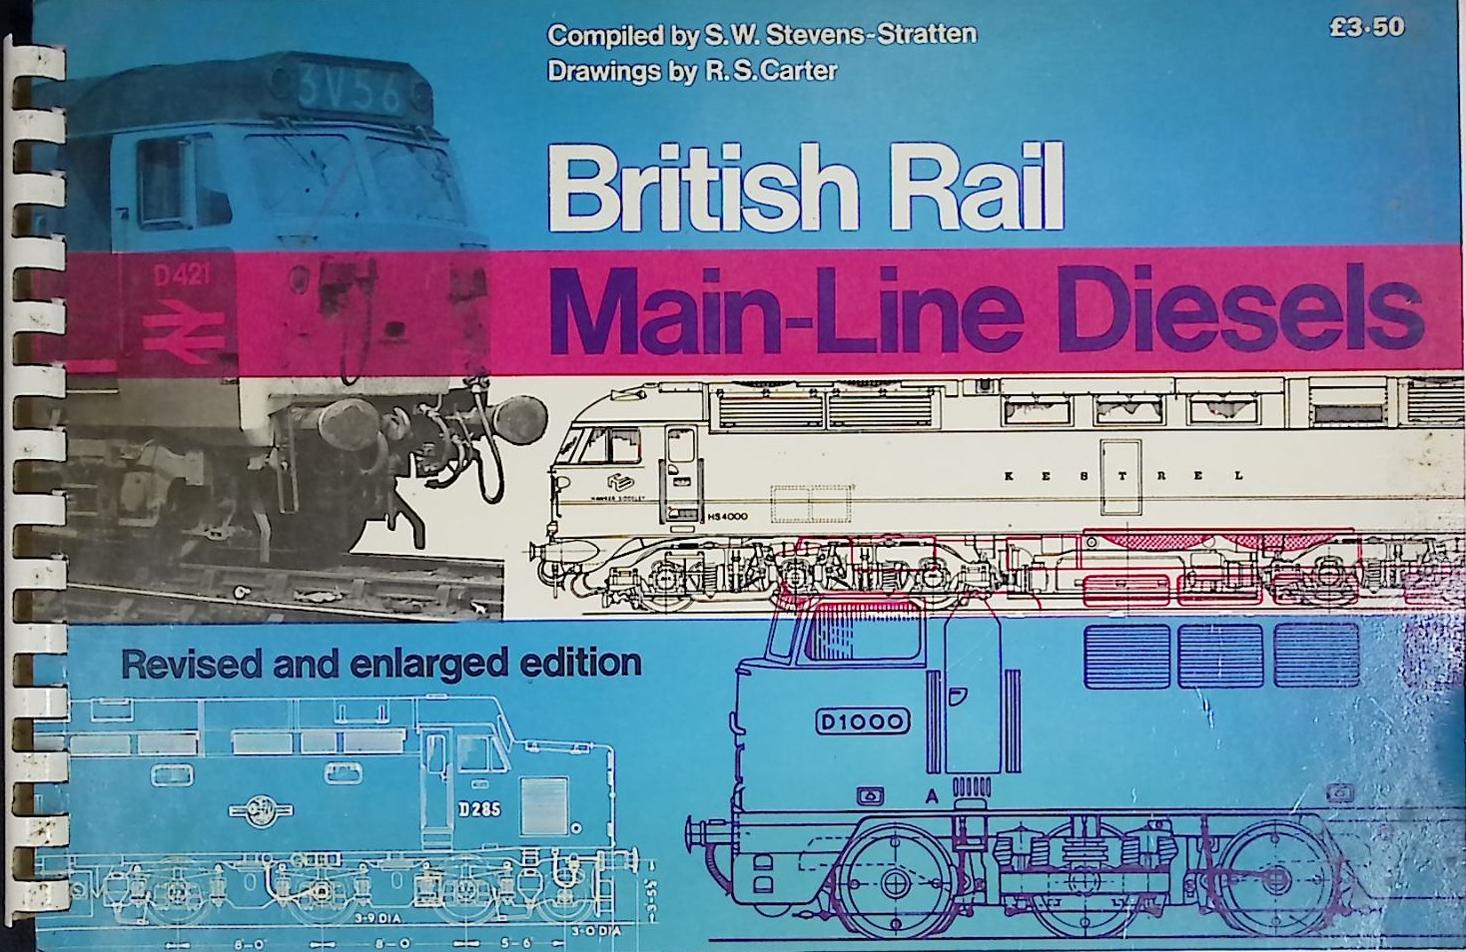 British Rail Main-Line Diesels